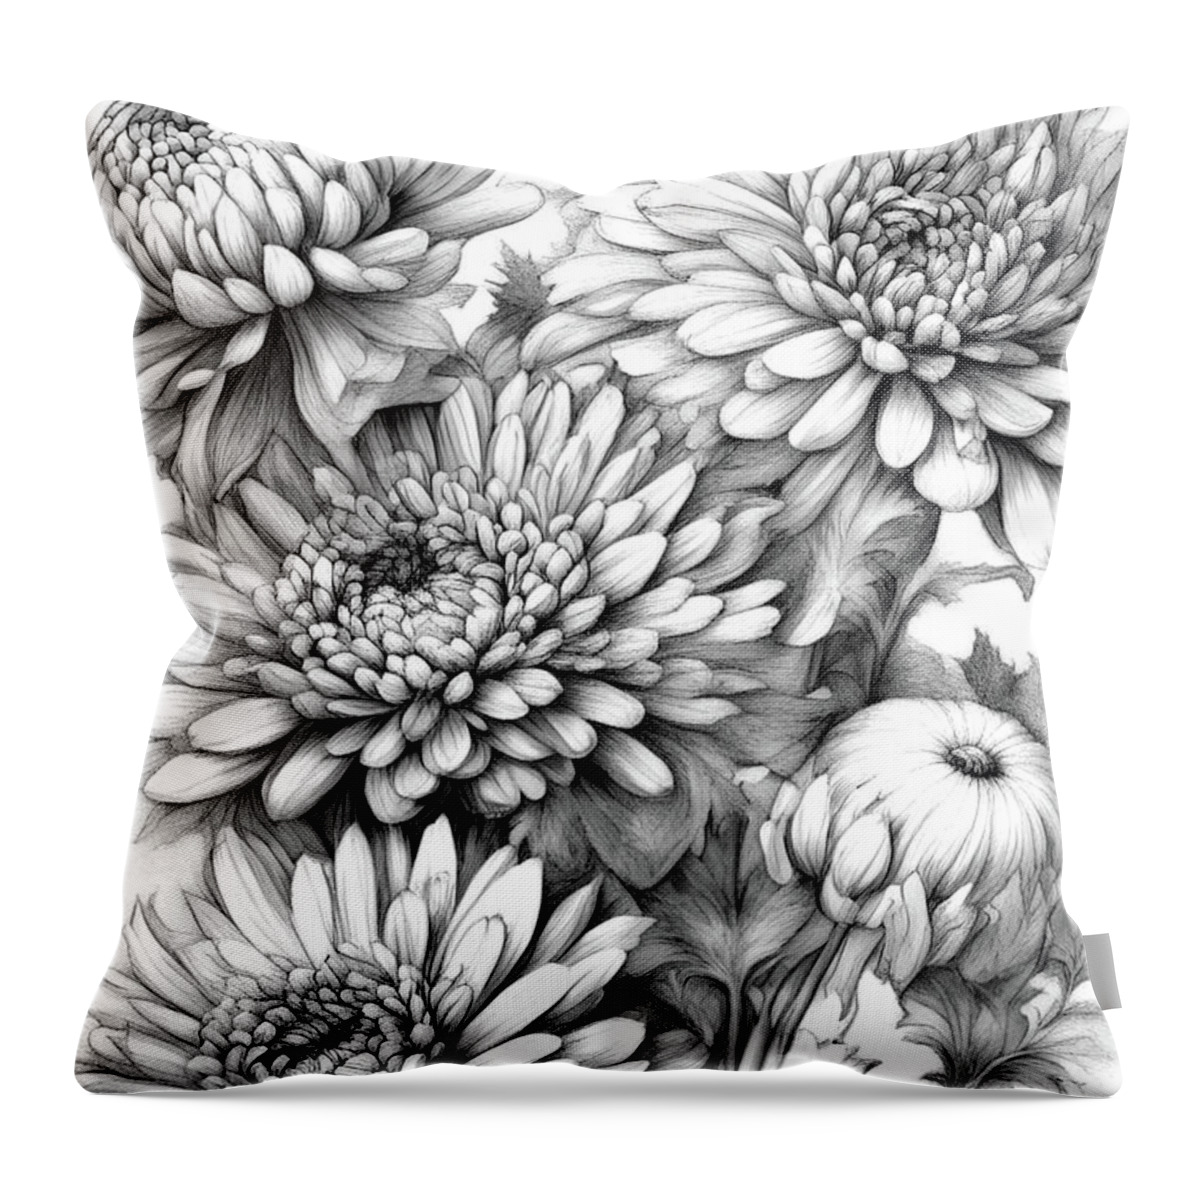 Chrysanthemum Throw Pillow featuring the digital art Chrysanthemum Paint a Sketch by Delynn Addams